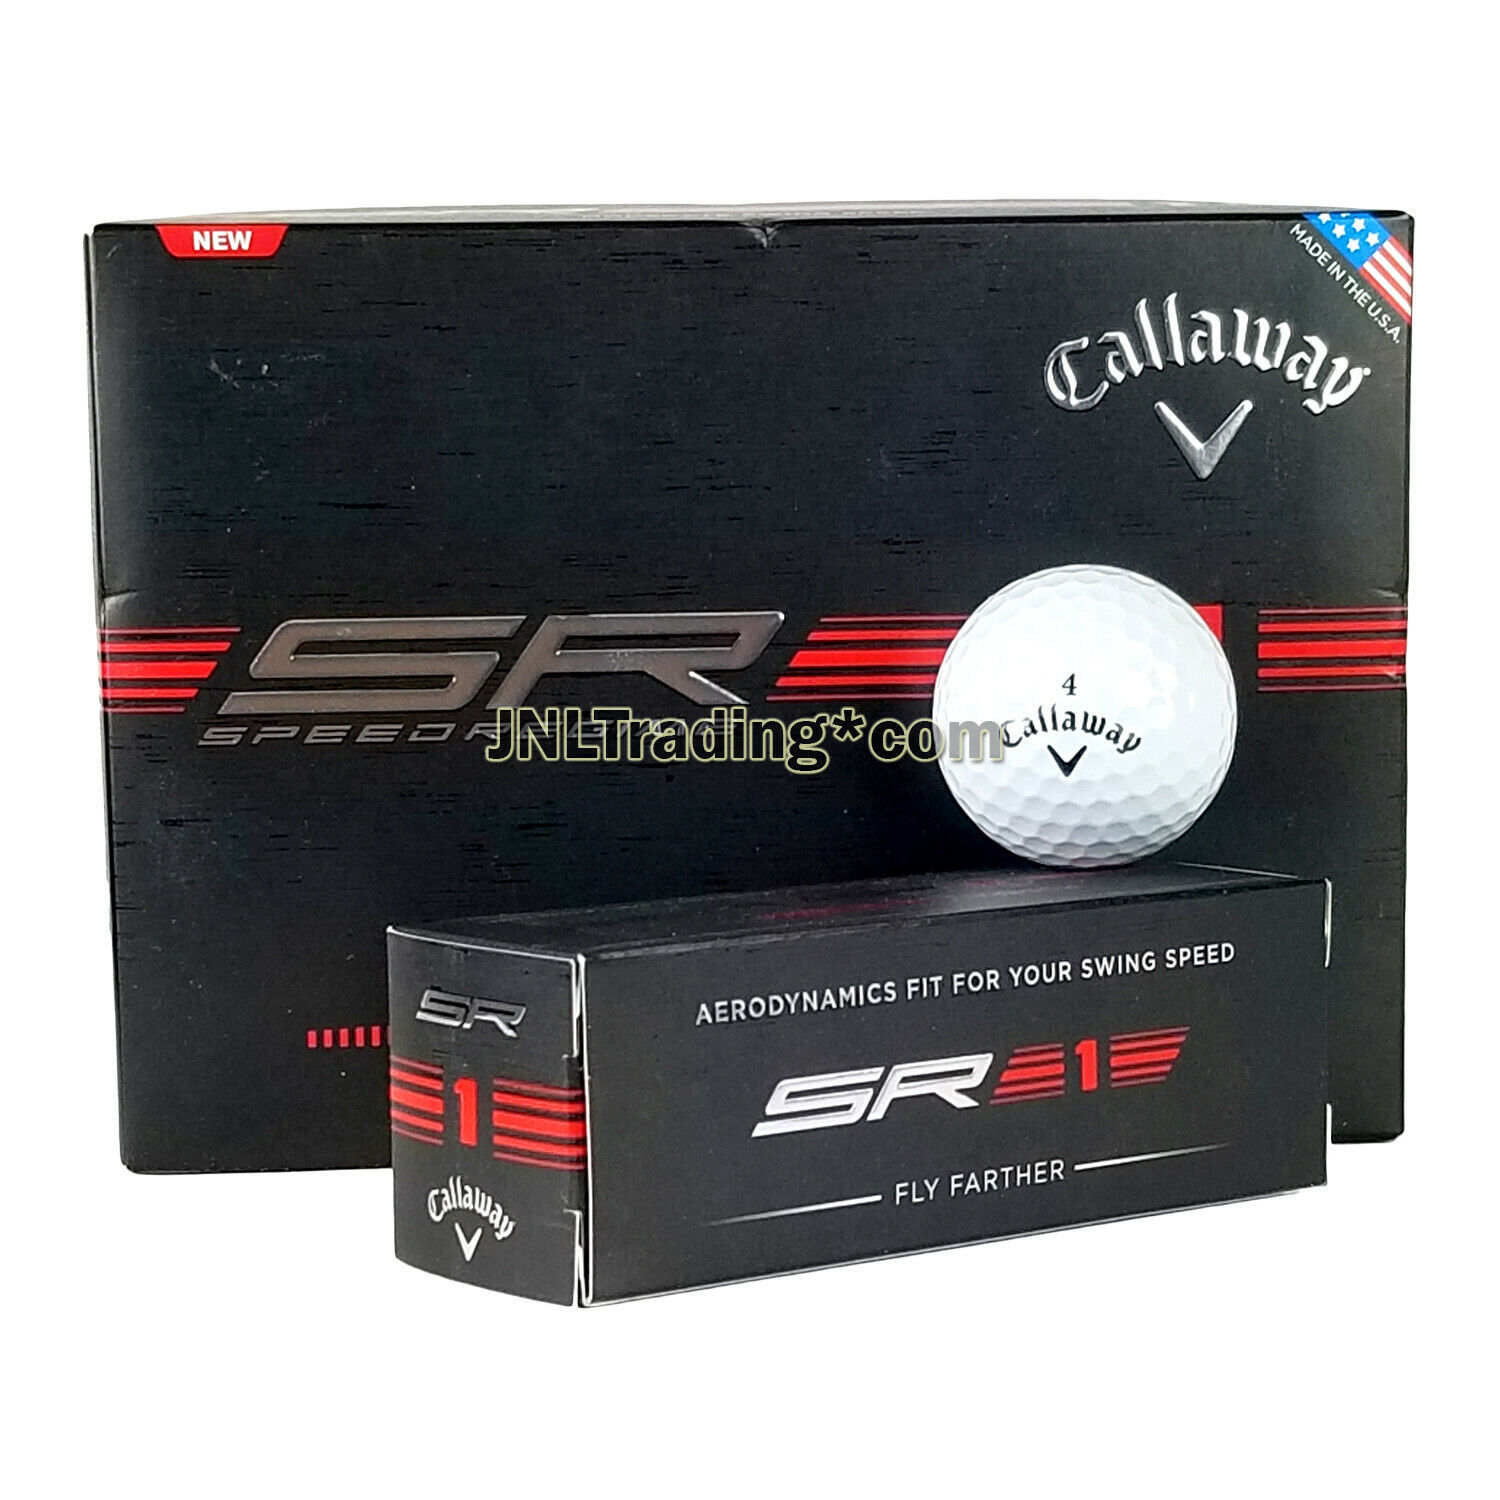 Callaway Speed Regime SR1 Moderate Swing Dual Core Urethane Golf Ball (Qty:12) - $44.99